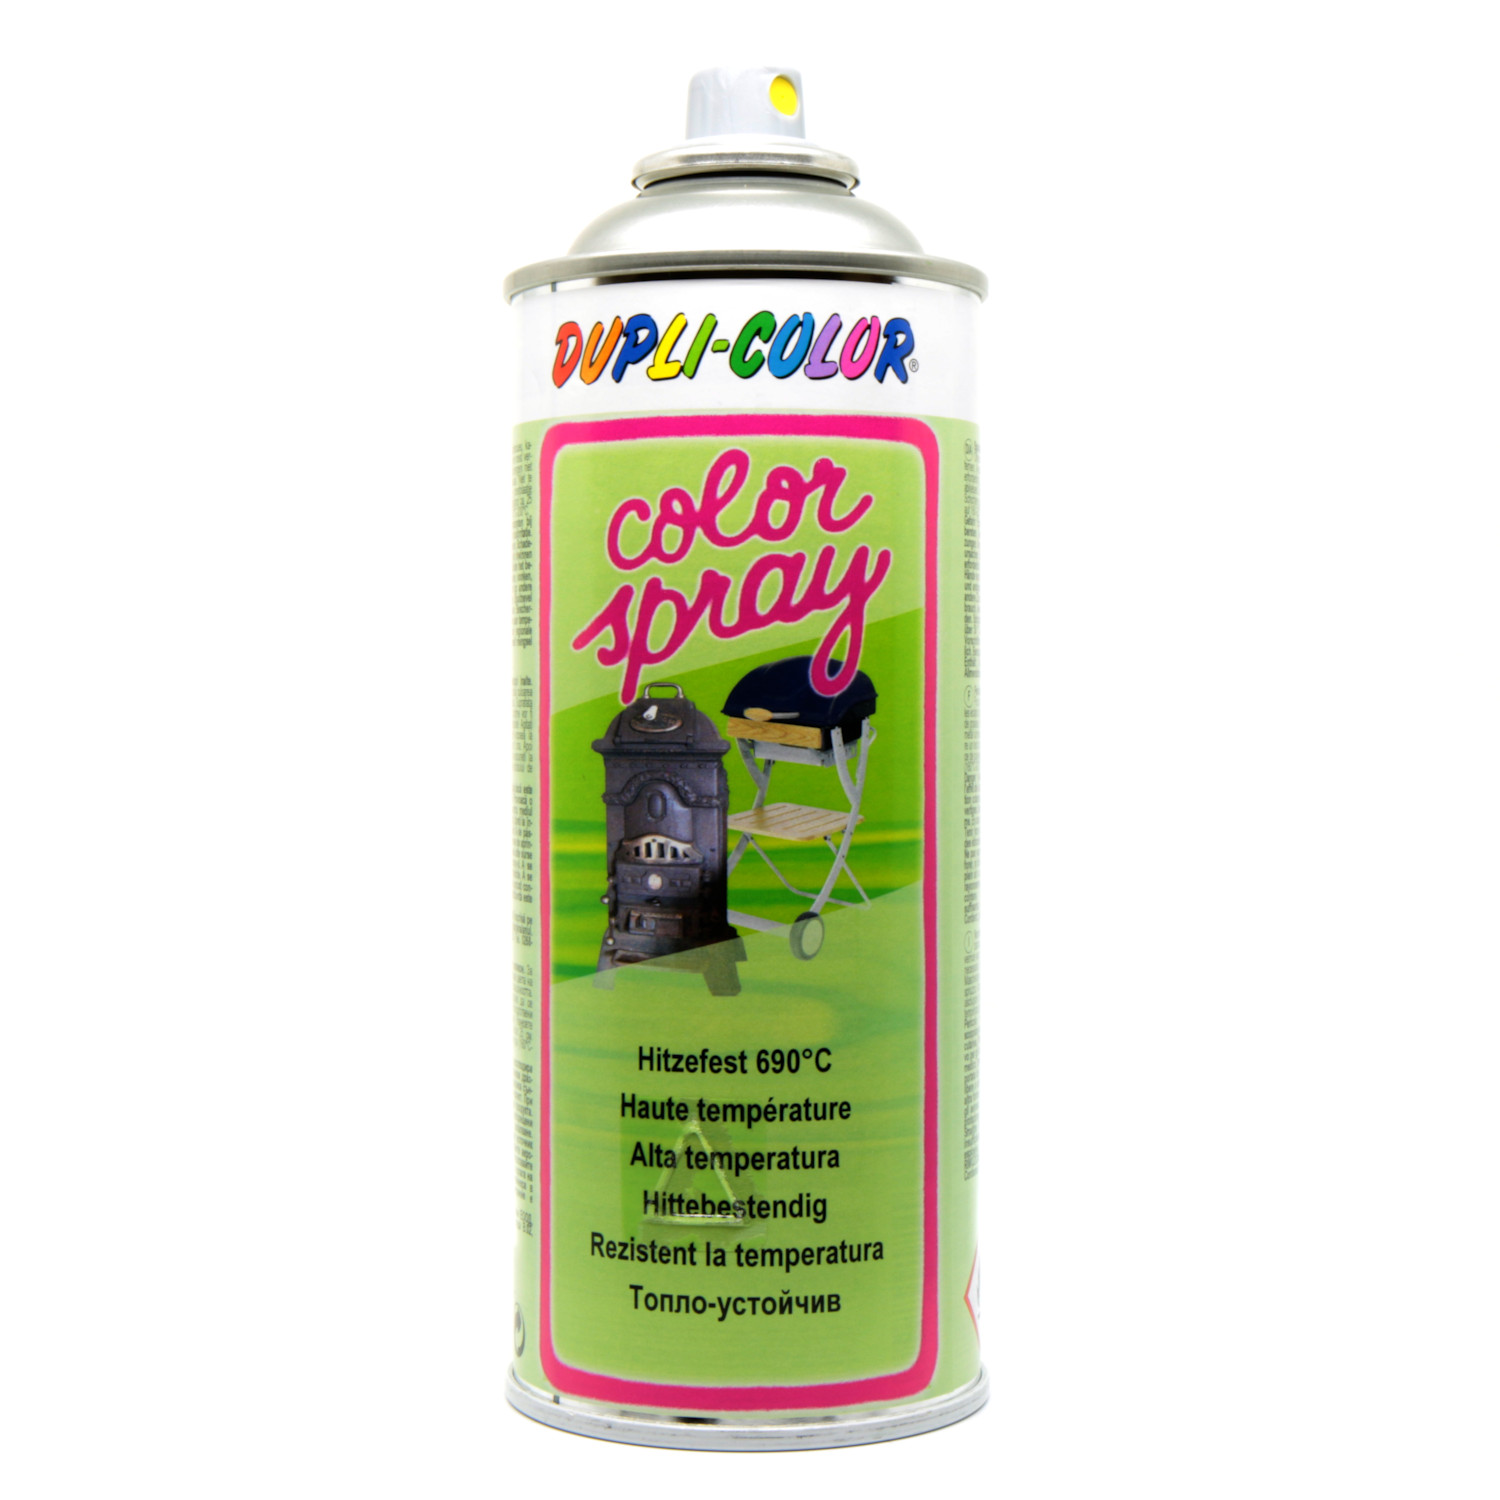 Vernice spray upli-Color COLOR alte temperature 400 ml nero 690°C